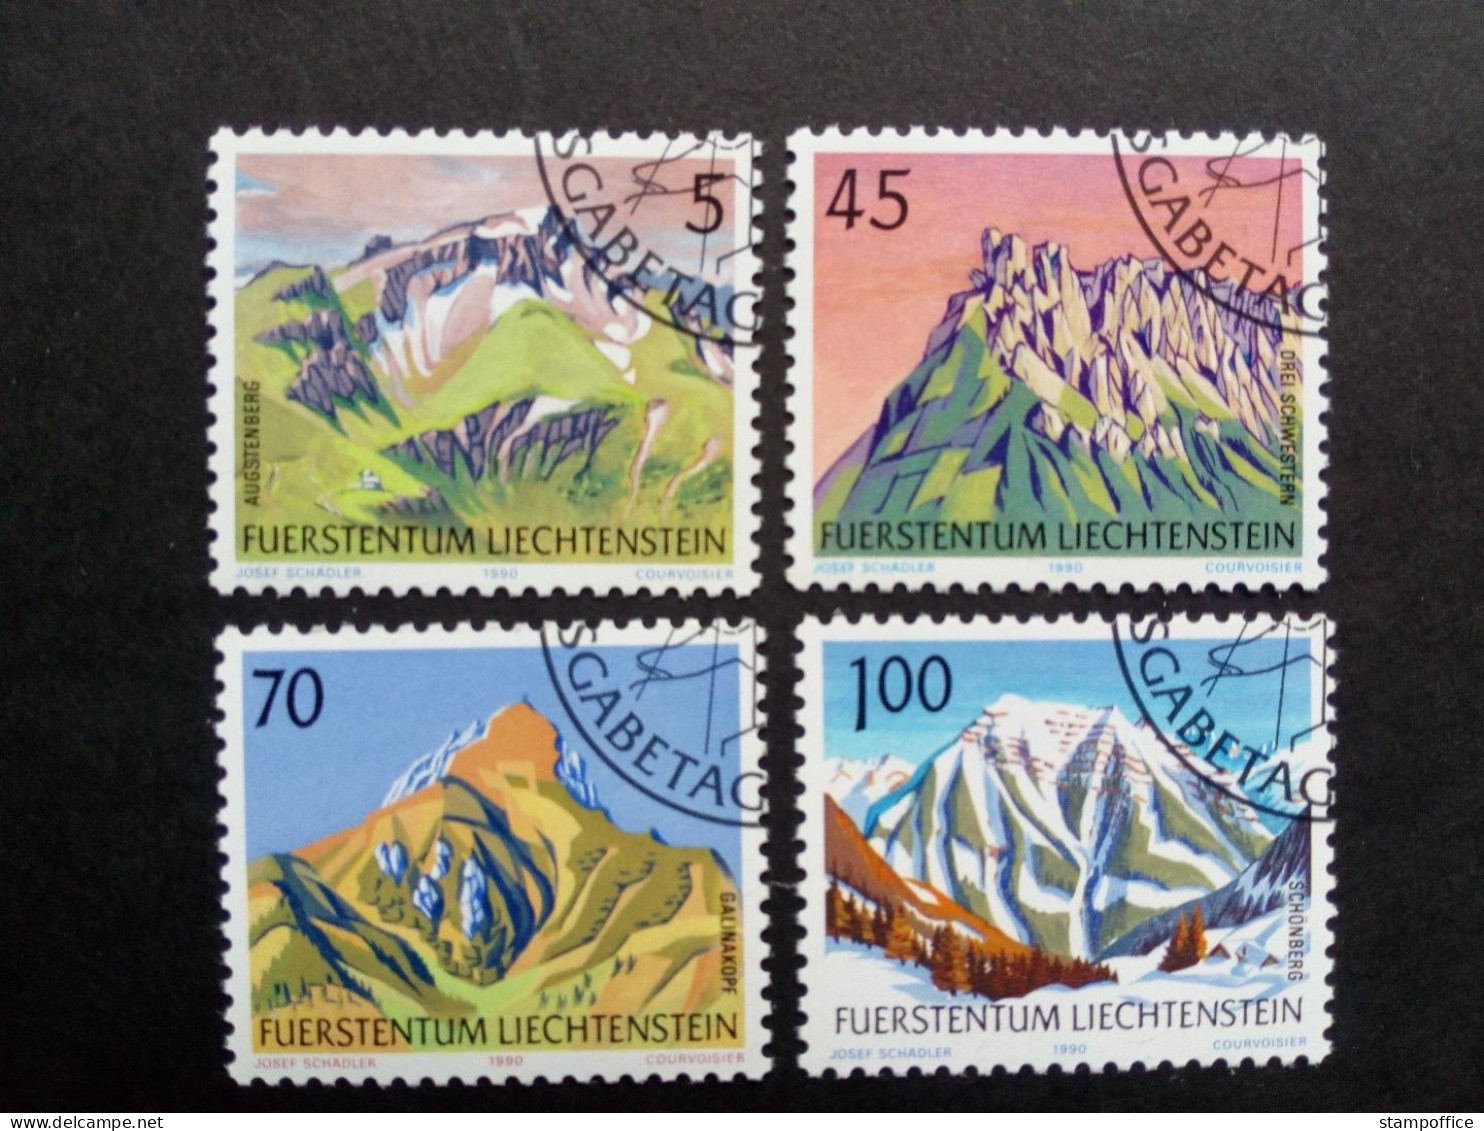 LIECHTENSTEIN MI-NR. 993-996 GESTEMPELT(USED) BERGE MOUNTAIN 1990 - Used Stamps